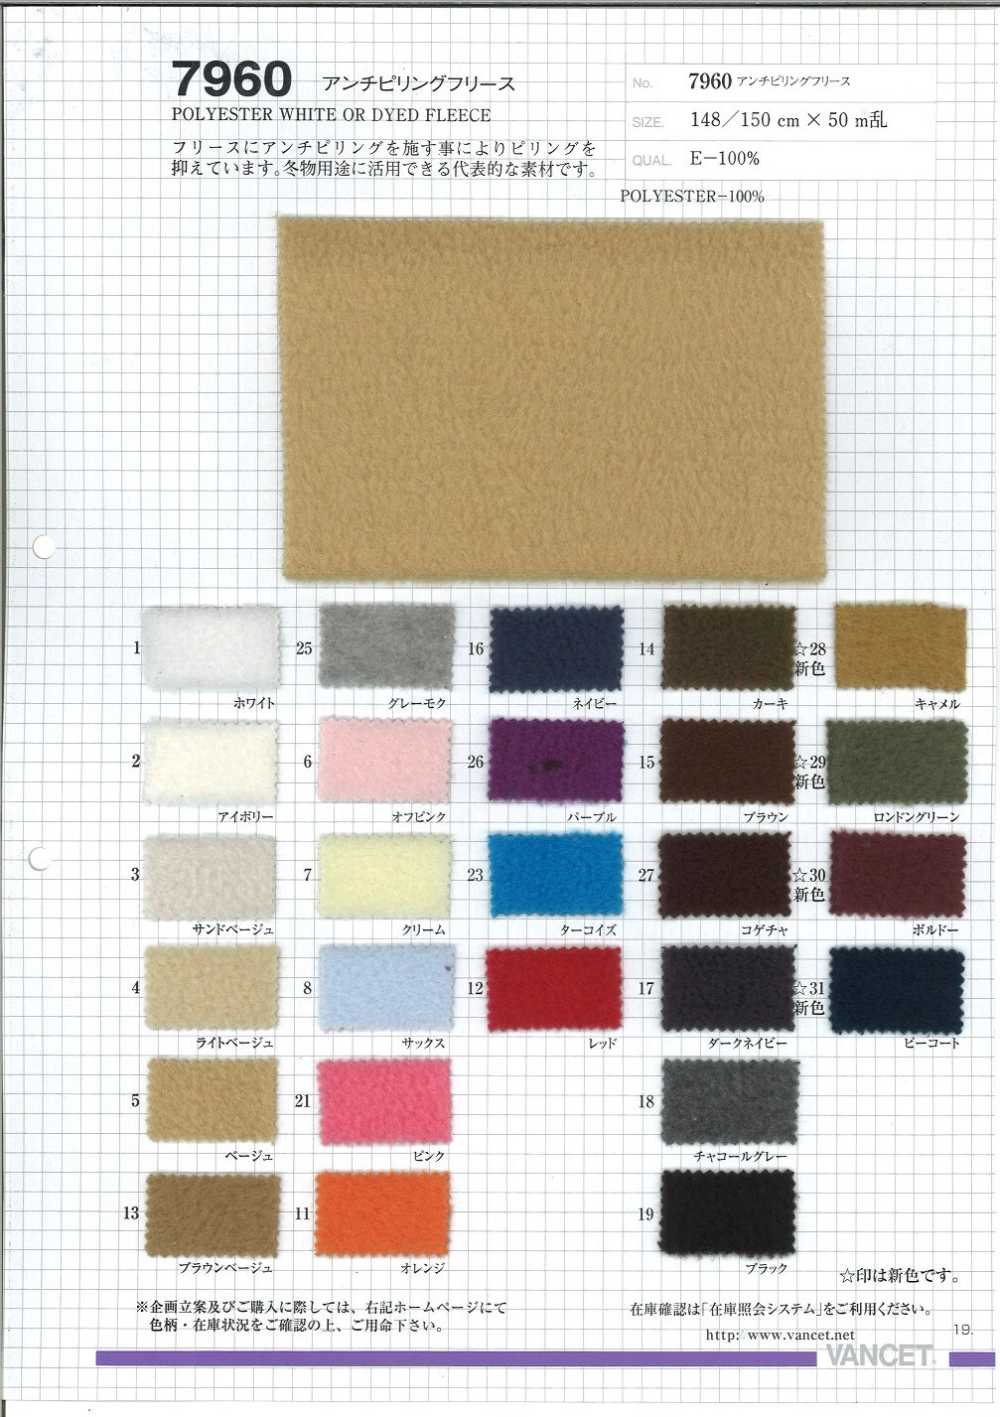 7960 Anti Pilling Fleece Textile Fabric Vancet Okura Shoji Co Ltd Apparelx Apparel Fabric Material B2b